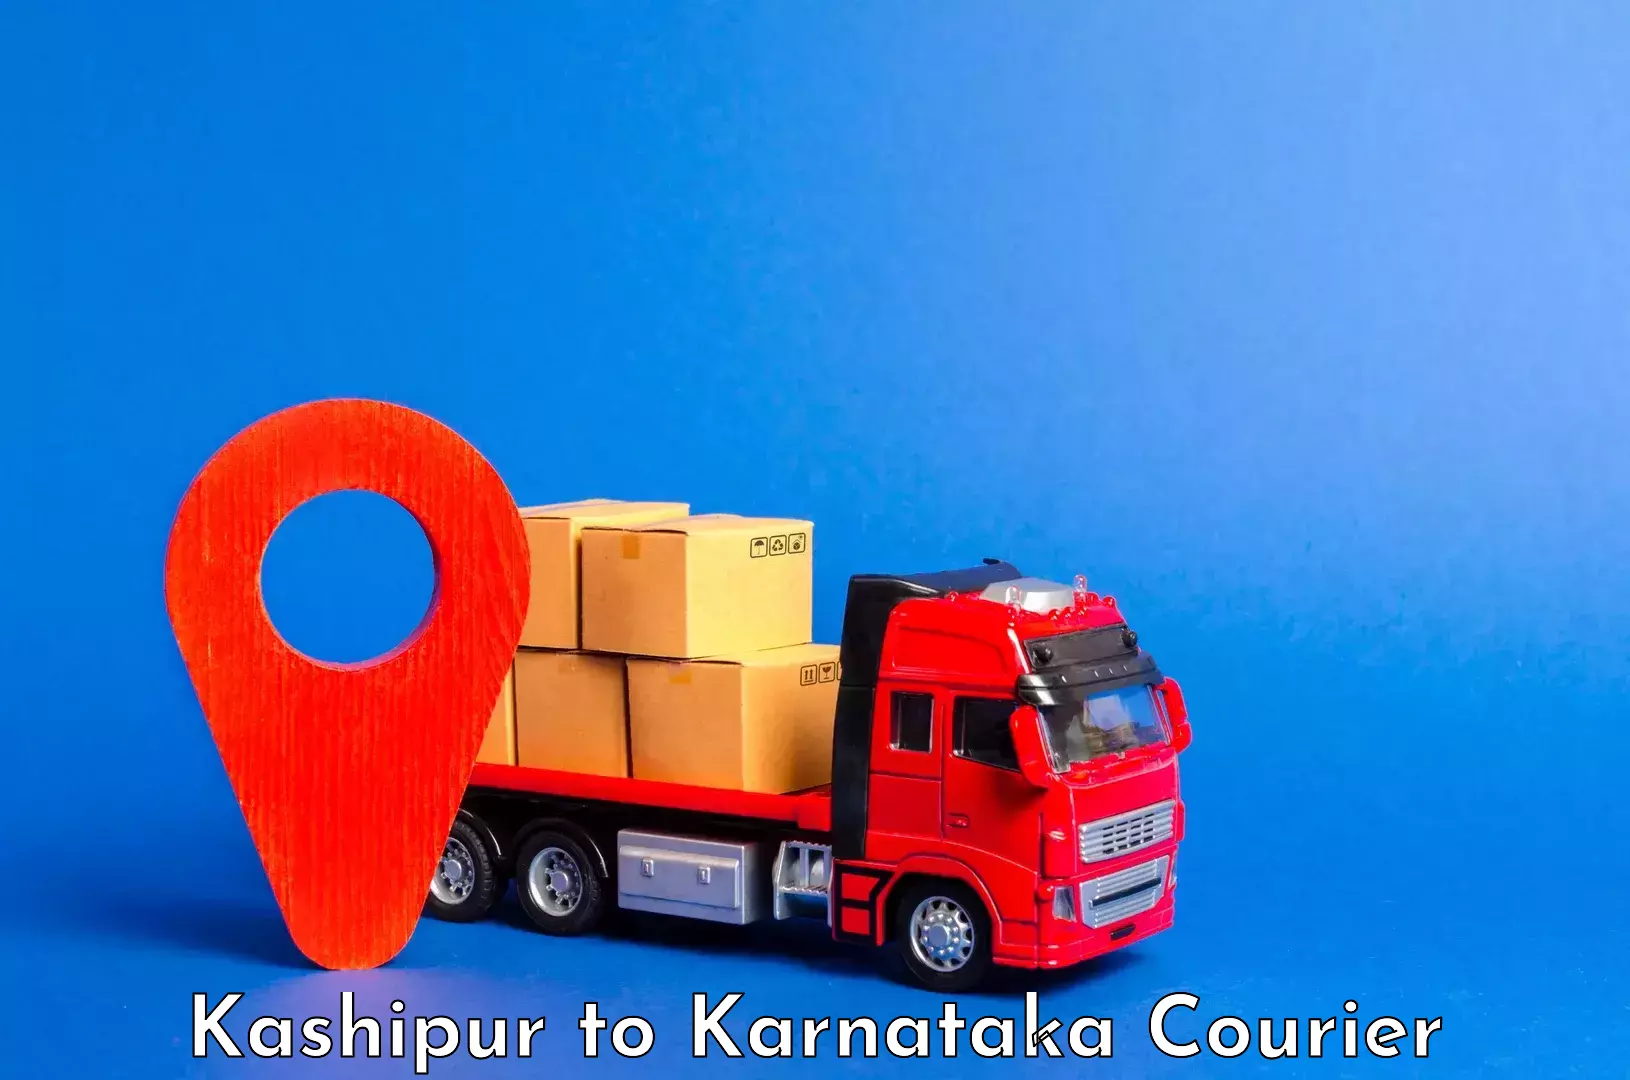 Luggage transport consultancy Kashipur to Karnataka